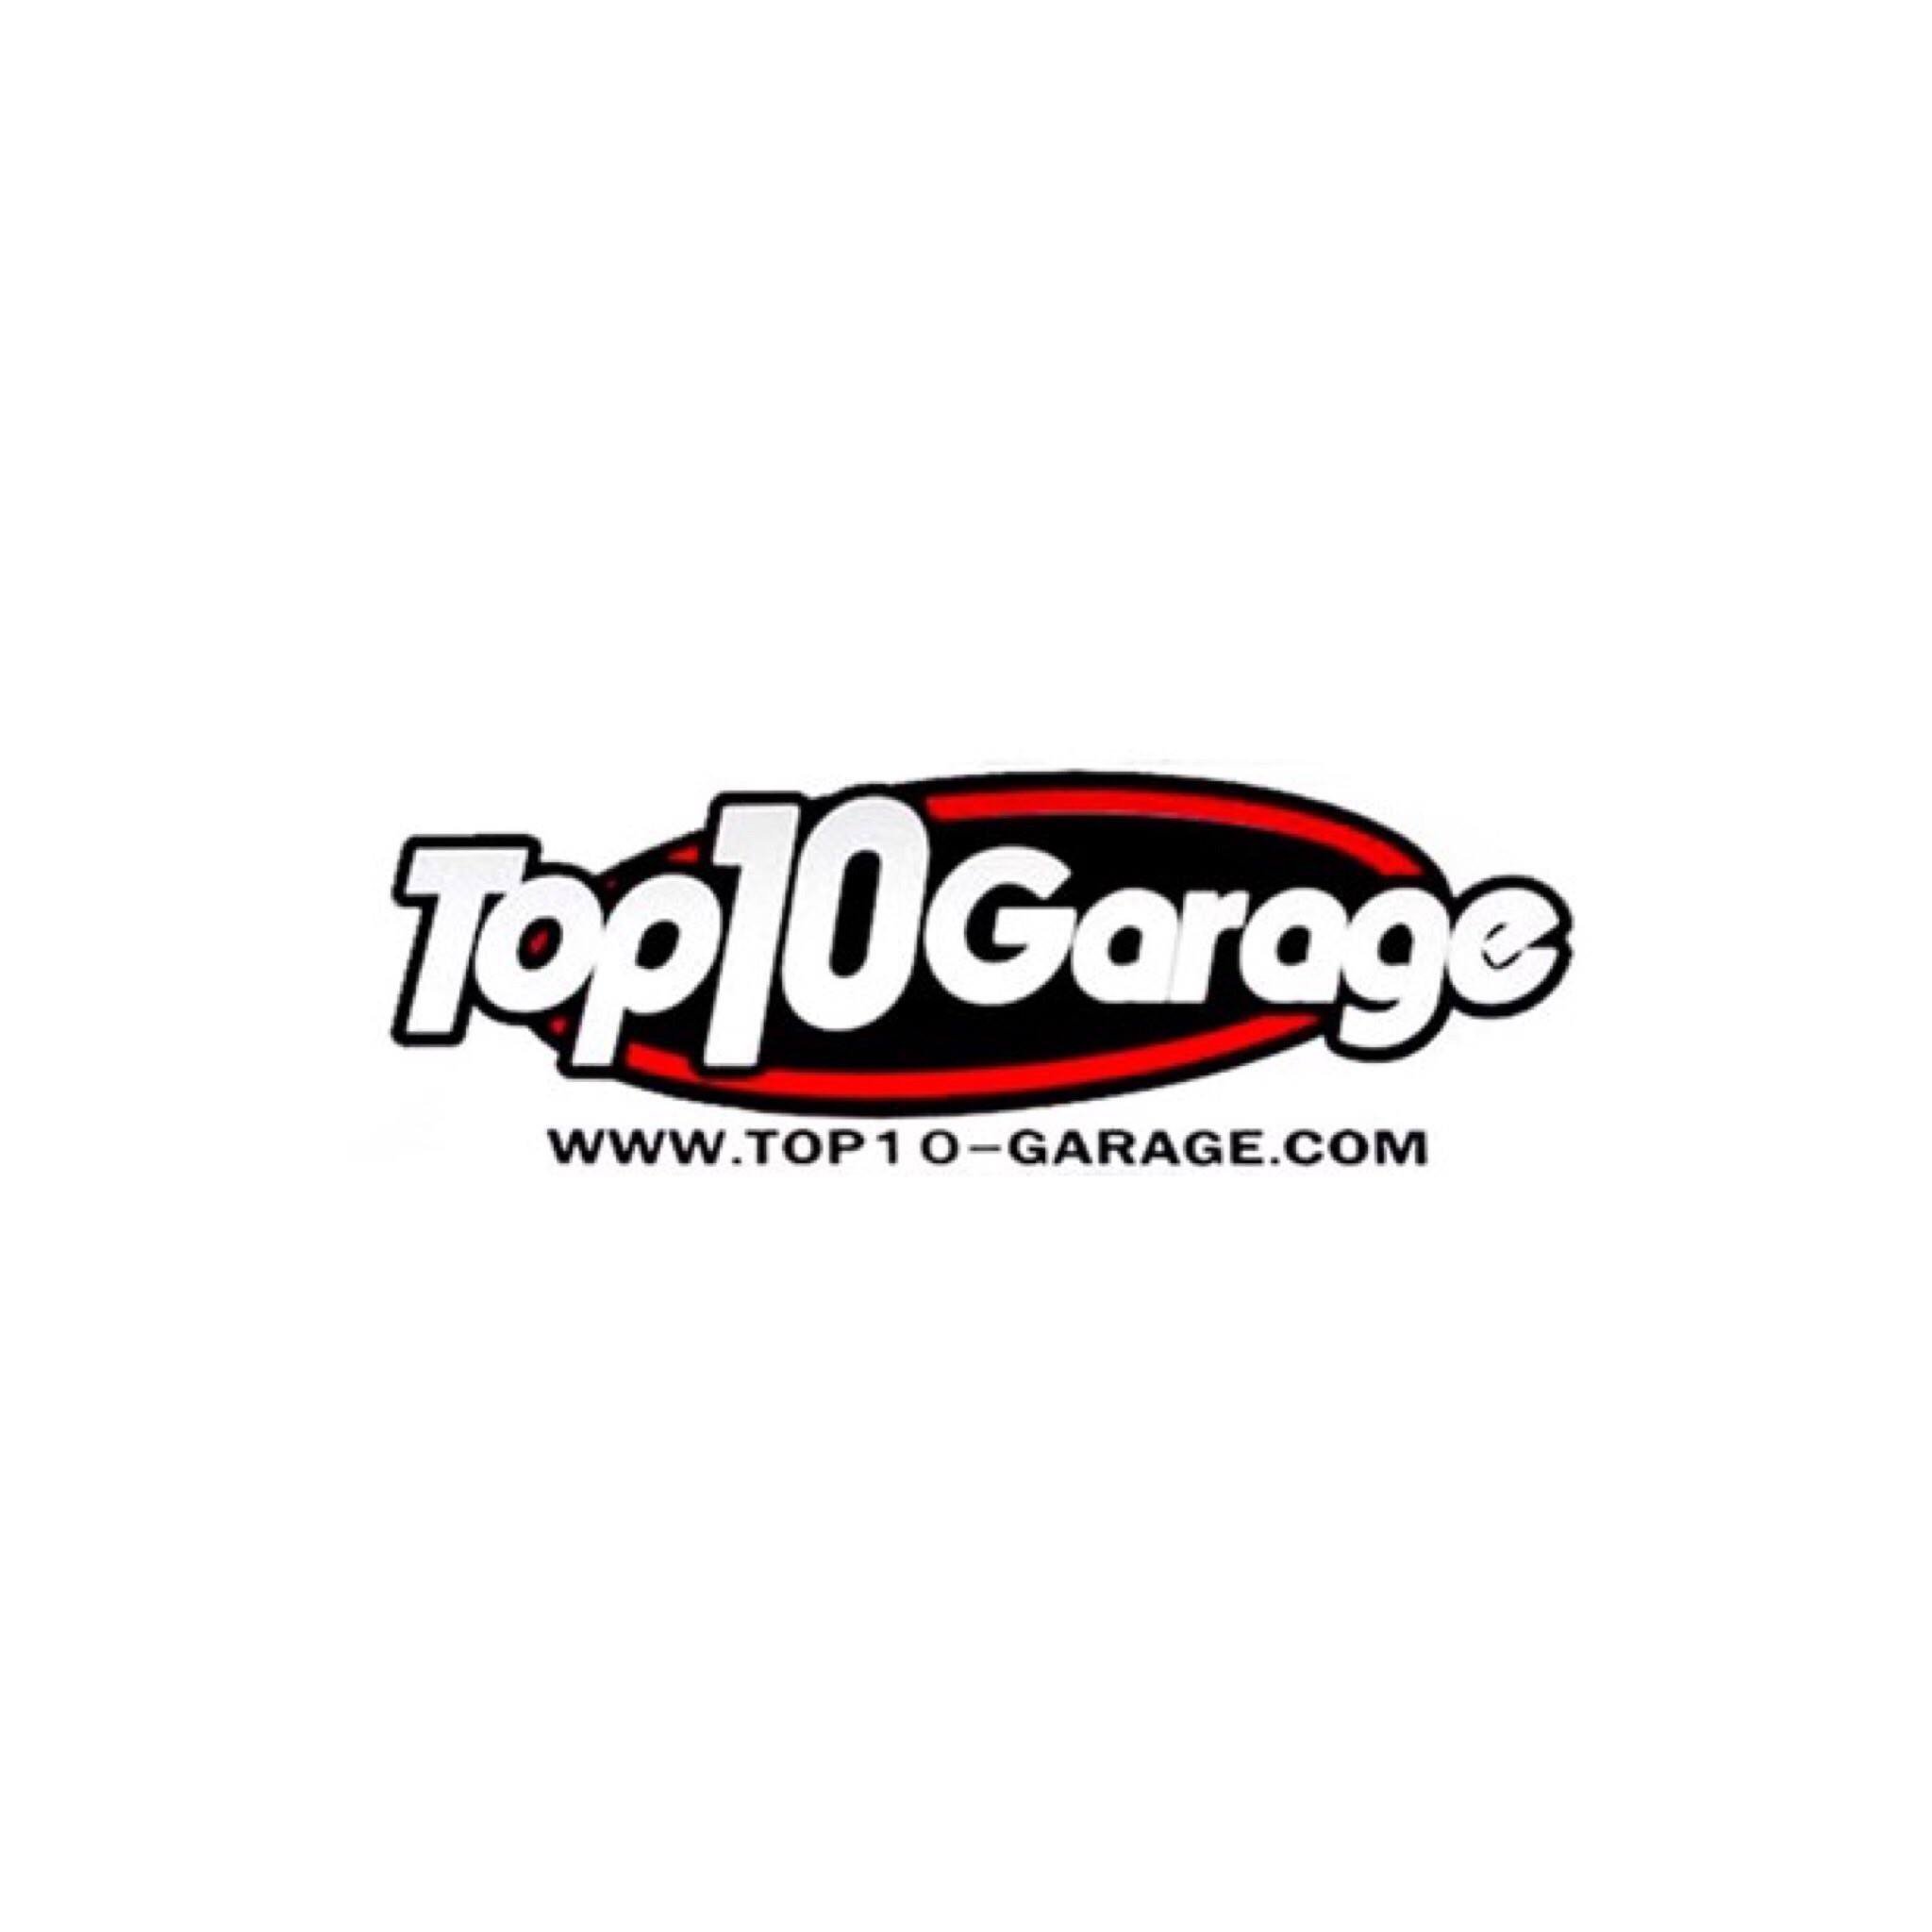 Top 10 Garage